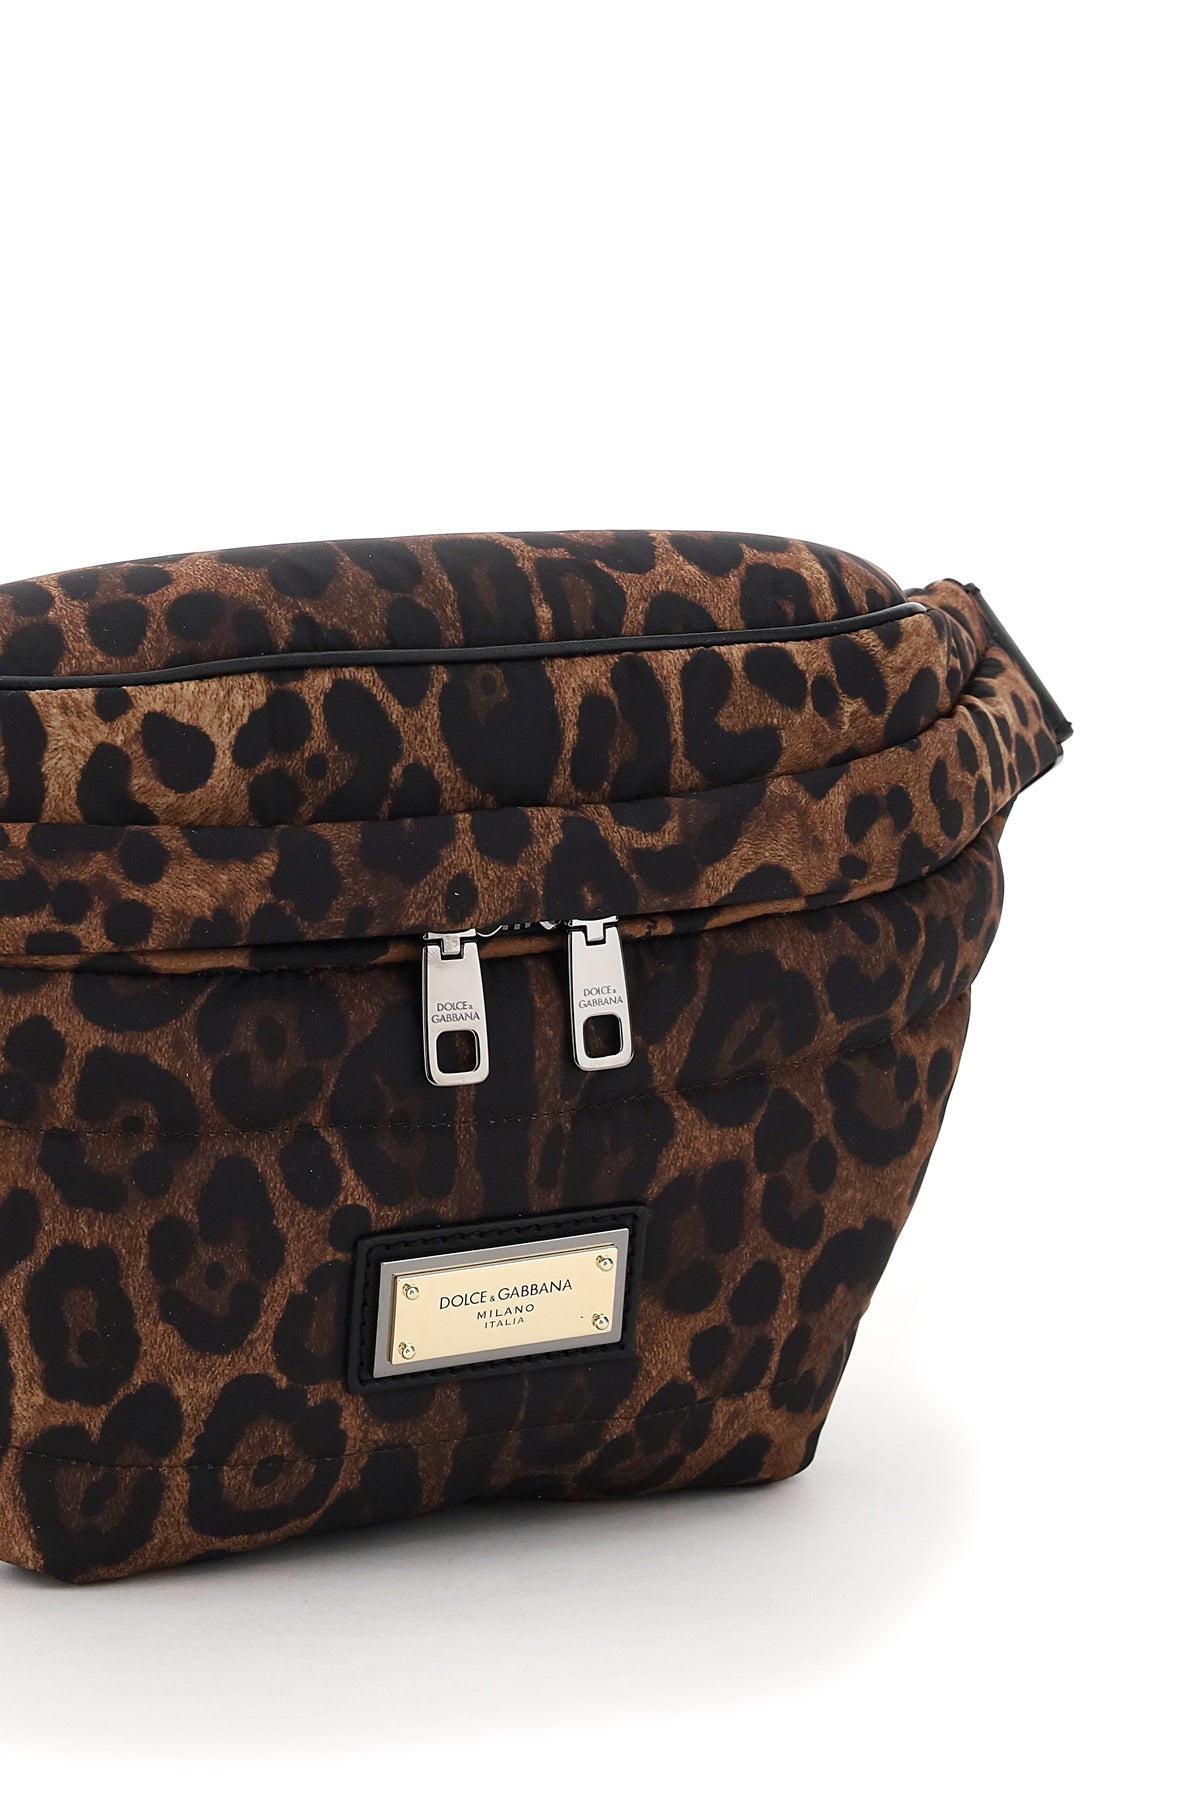 Dolce & Gabbana Leopard Print Nylon Beltbag   Brown